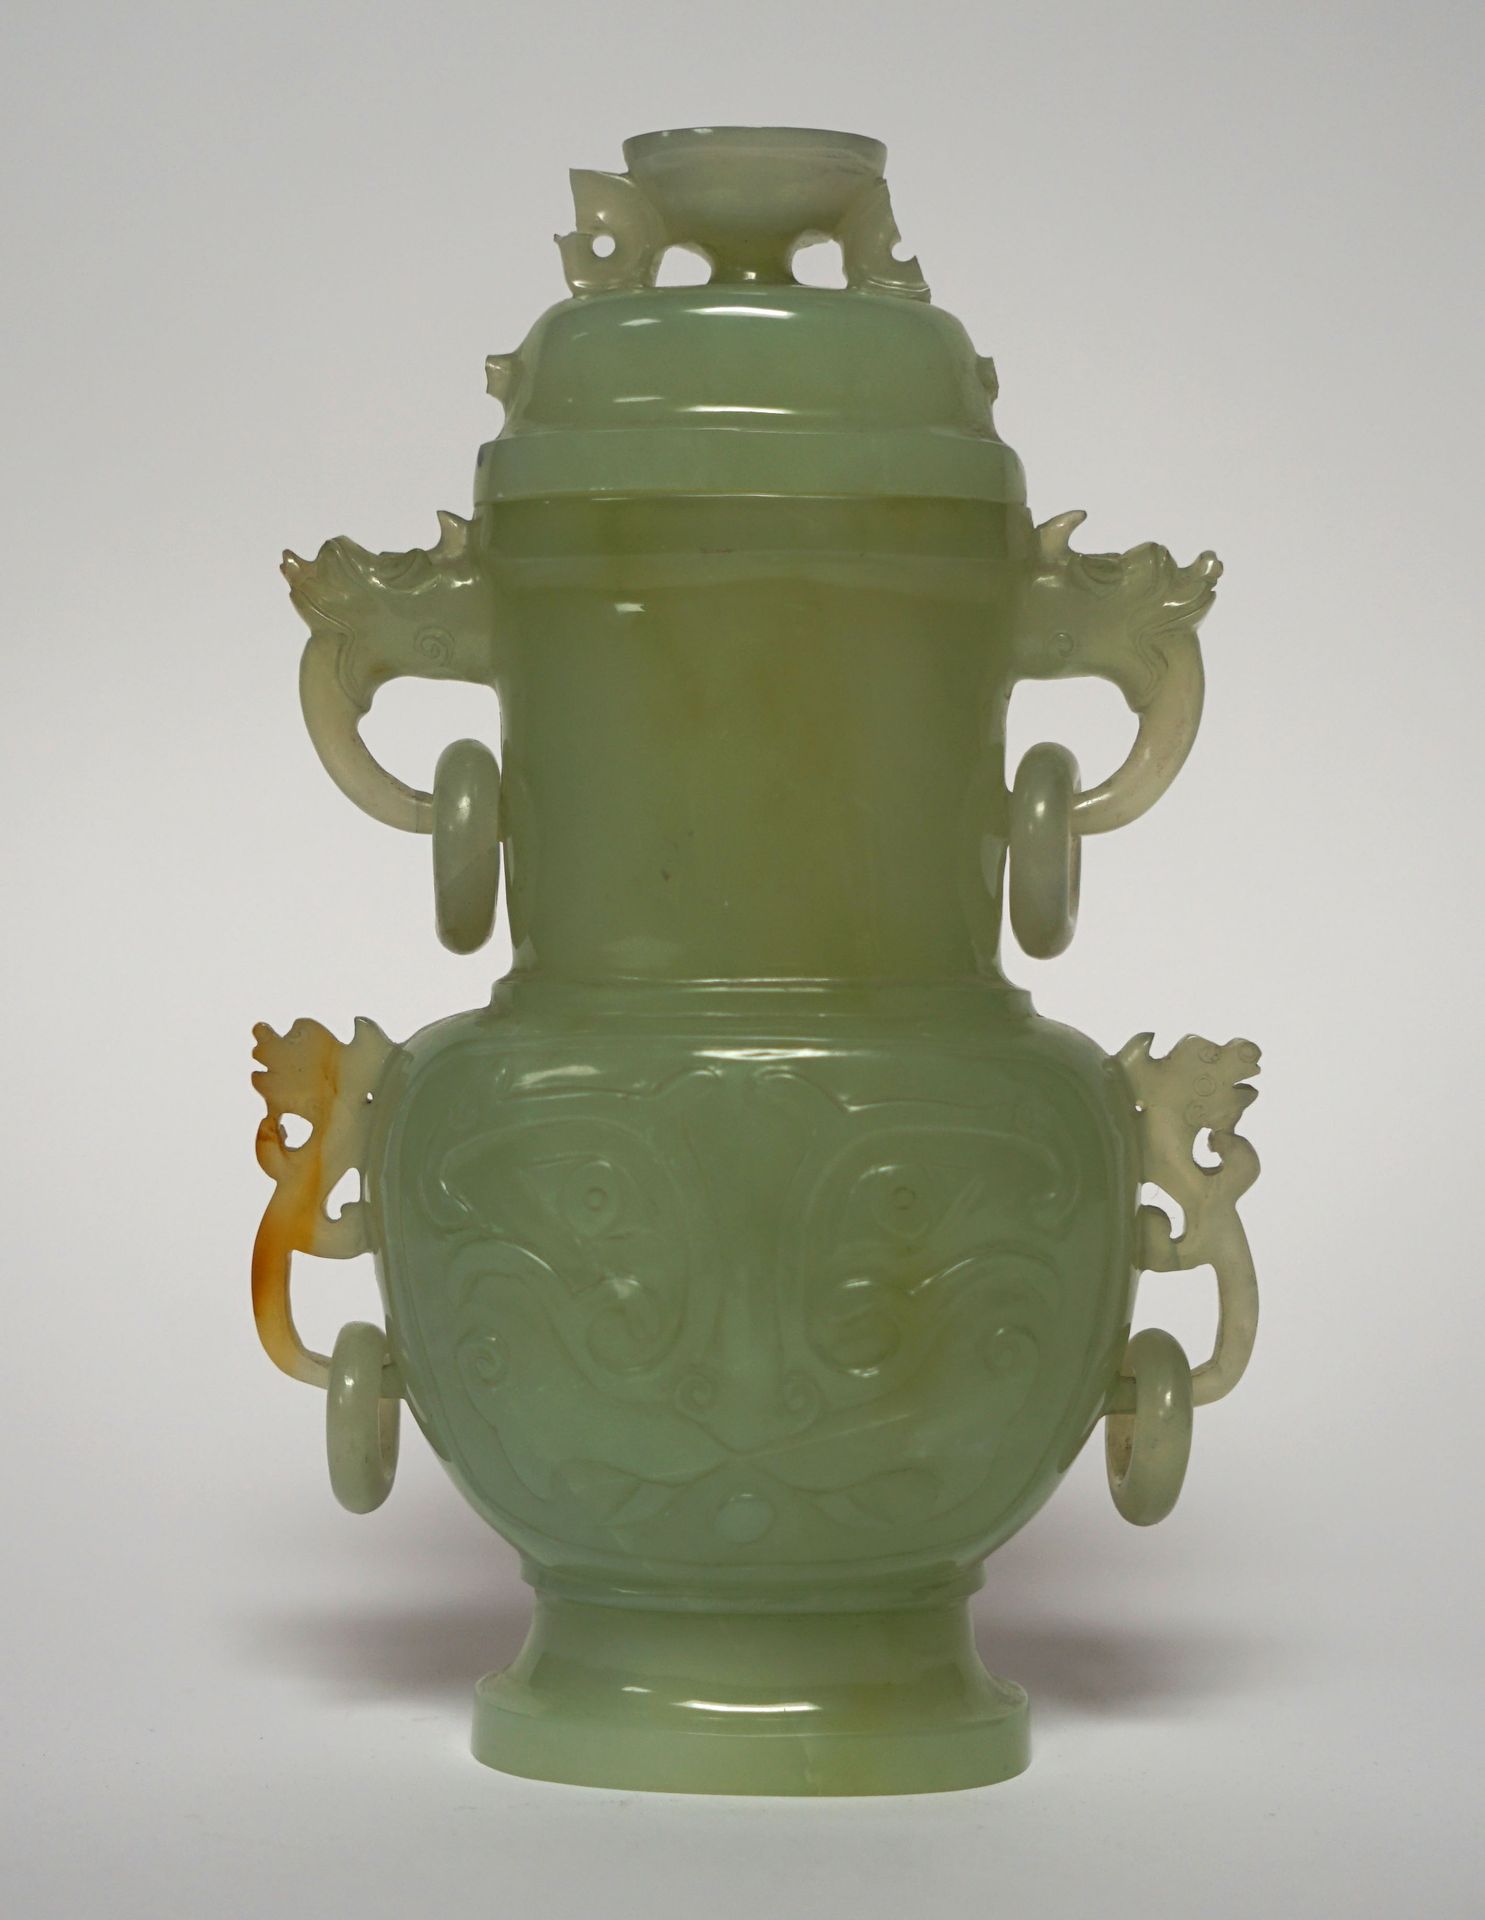 Null 中国。覆盖玉石的花瓶，瓶身饰有饕餮面具的造型，手柄上刻有大量的圆环。高20厘米。事故，一些元素要被粘回去。